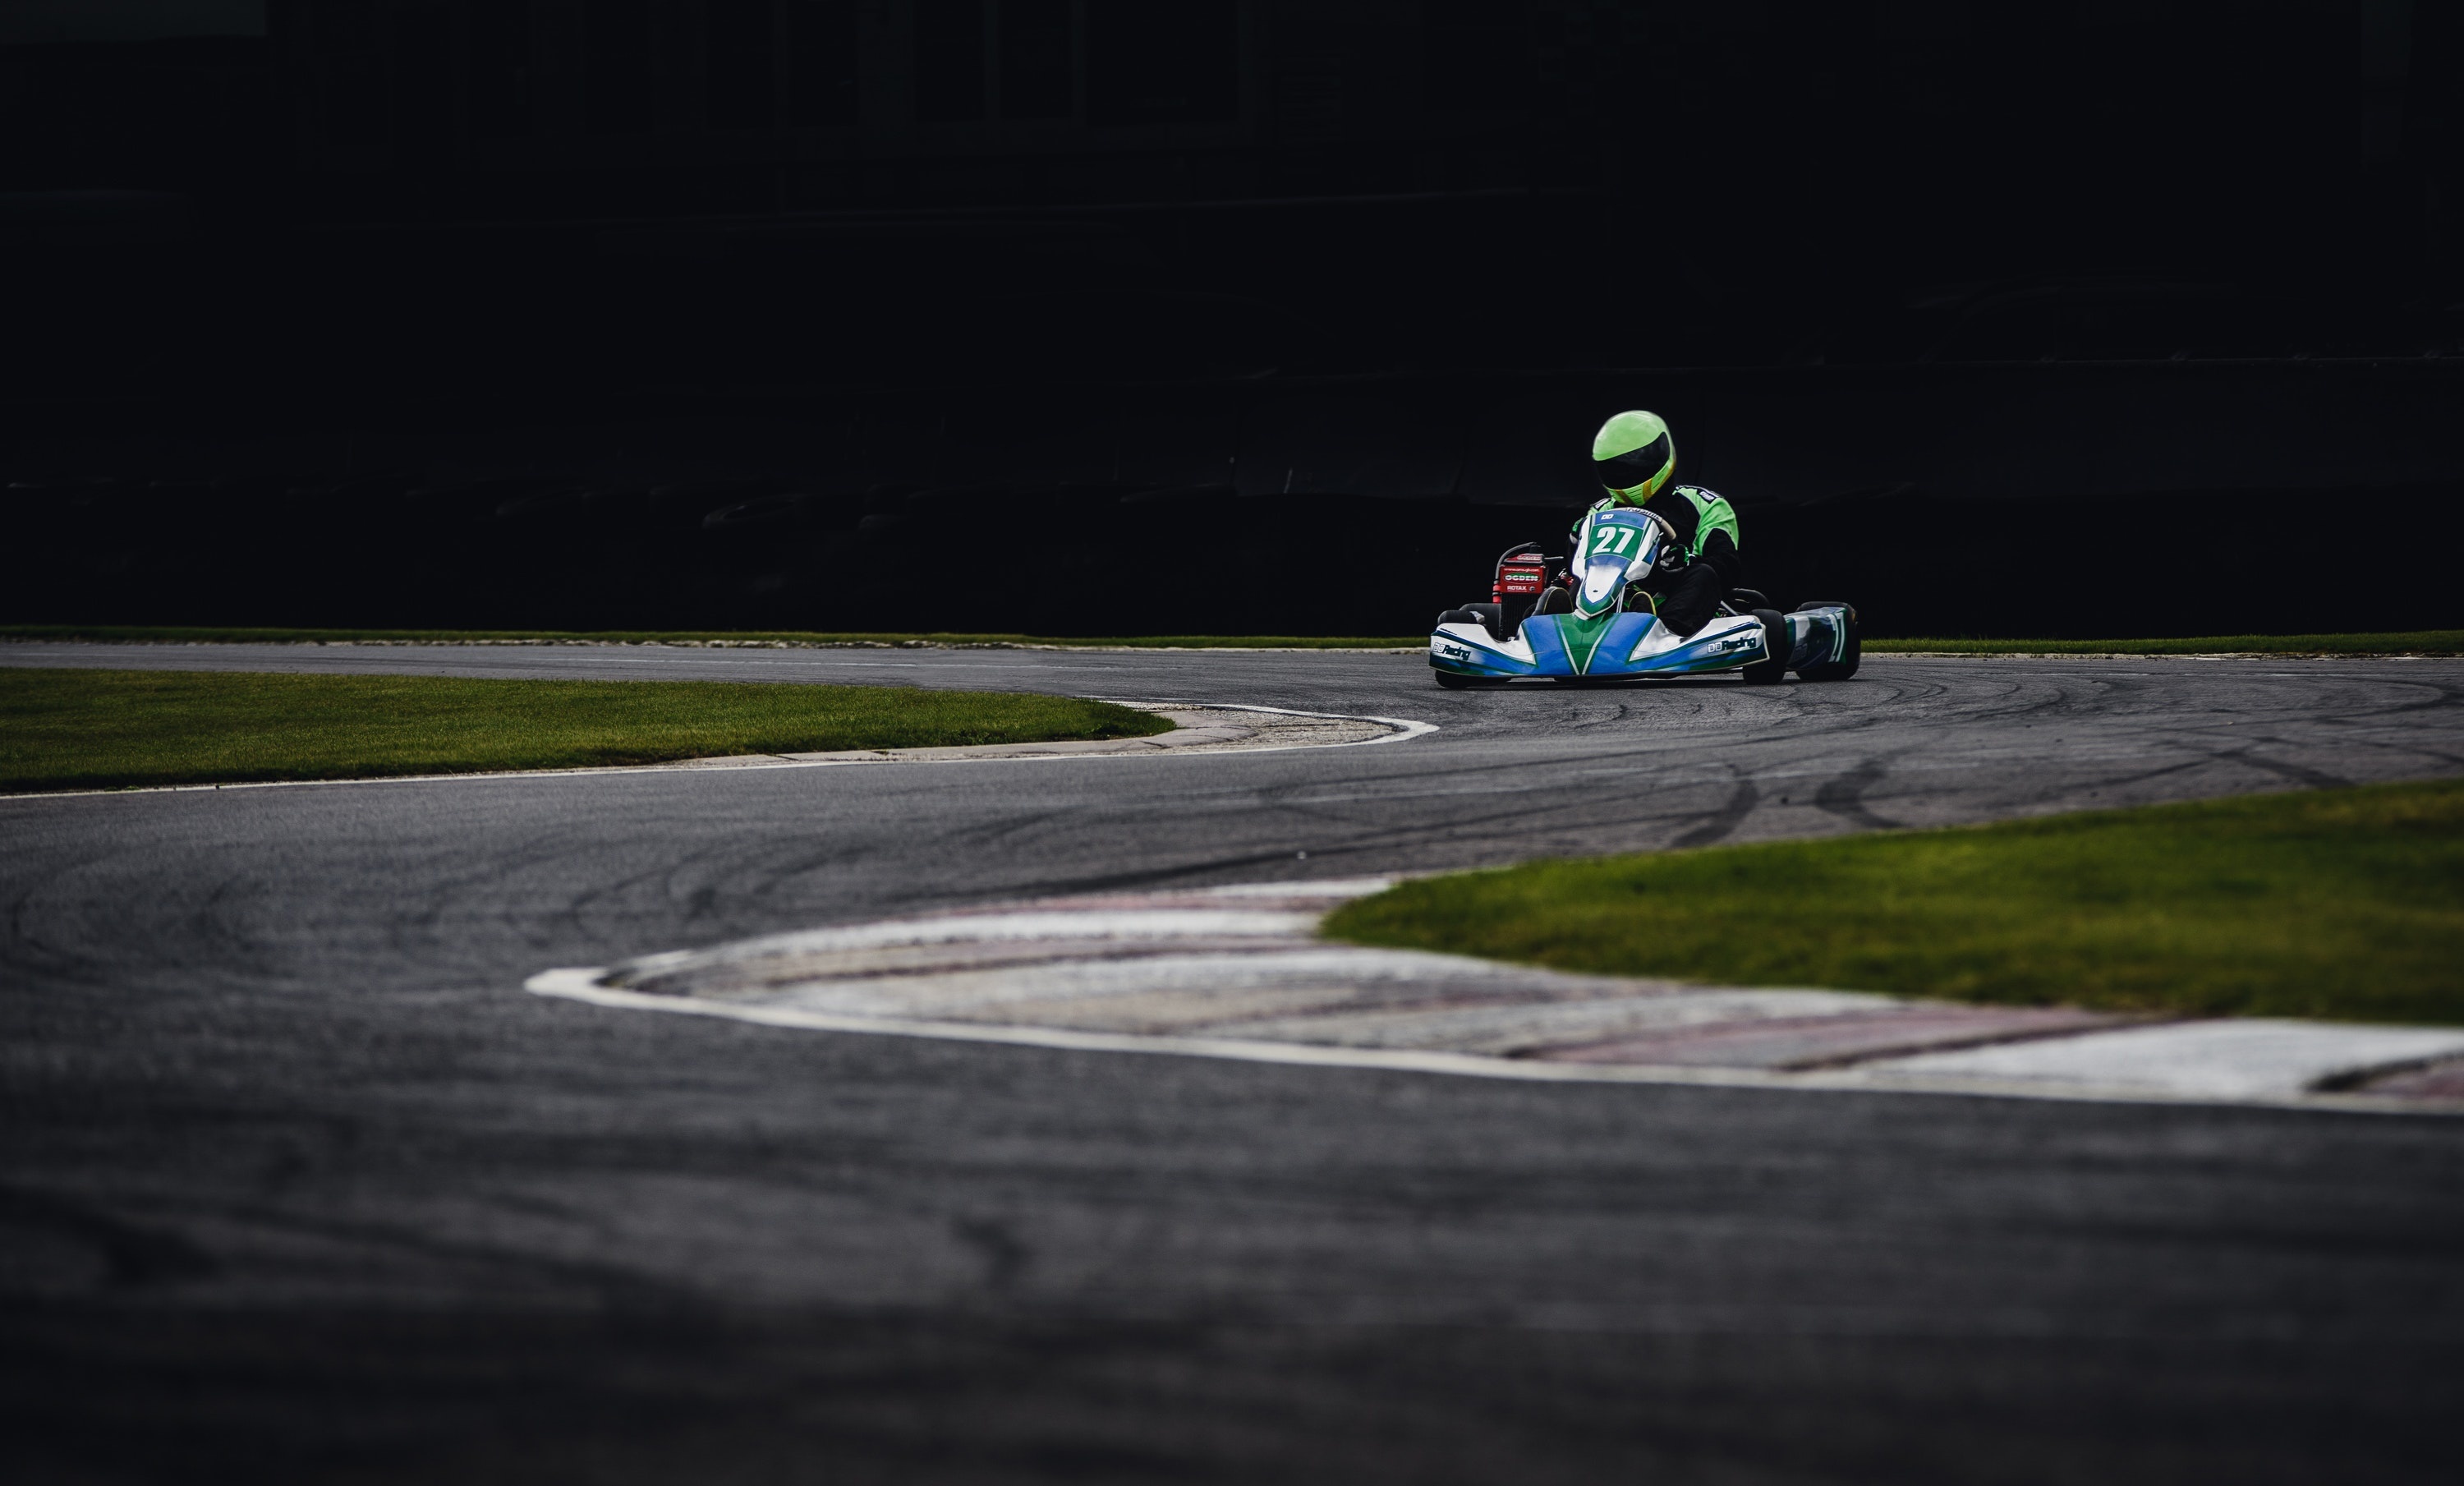 Karting: Professional racing drivers, Scaled-down circuit racing, Kart racing. 3000x1810 HD Wallpaper.